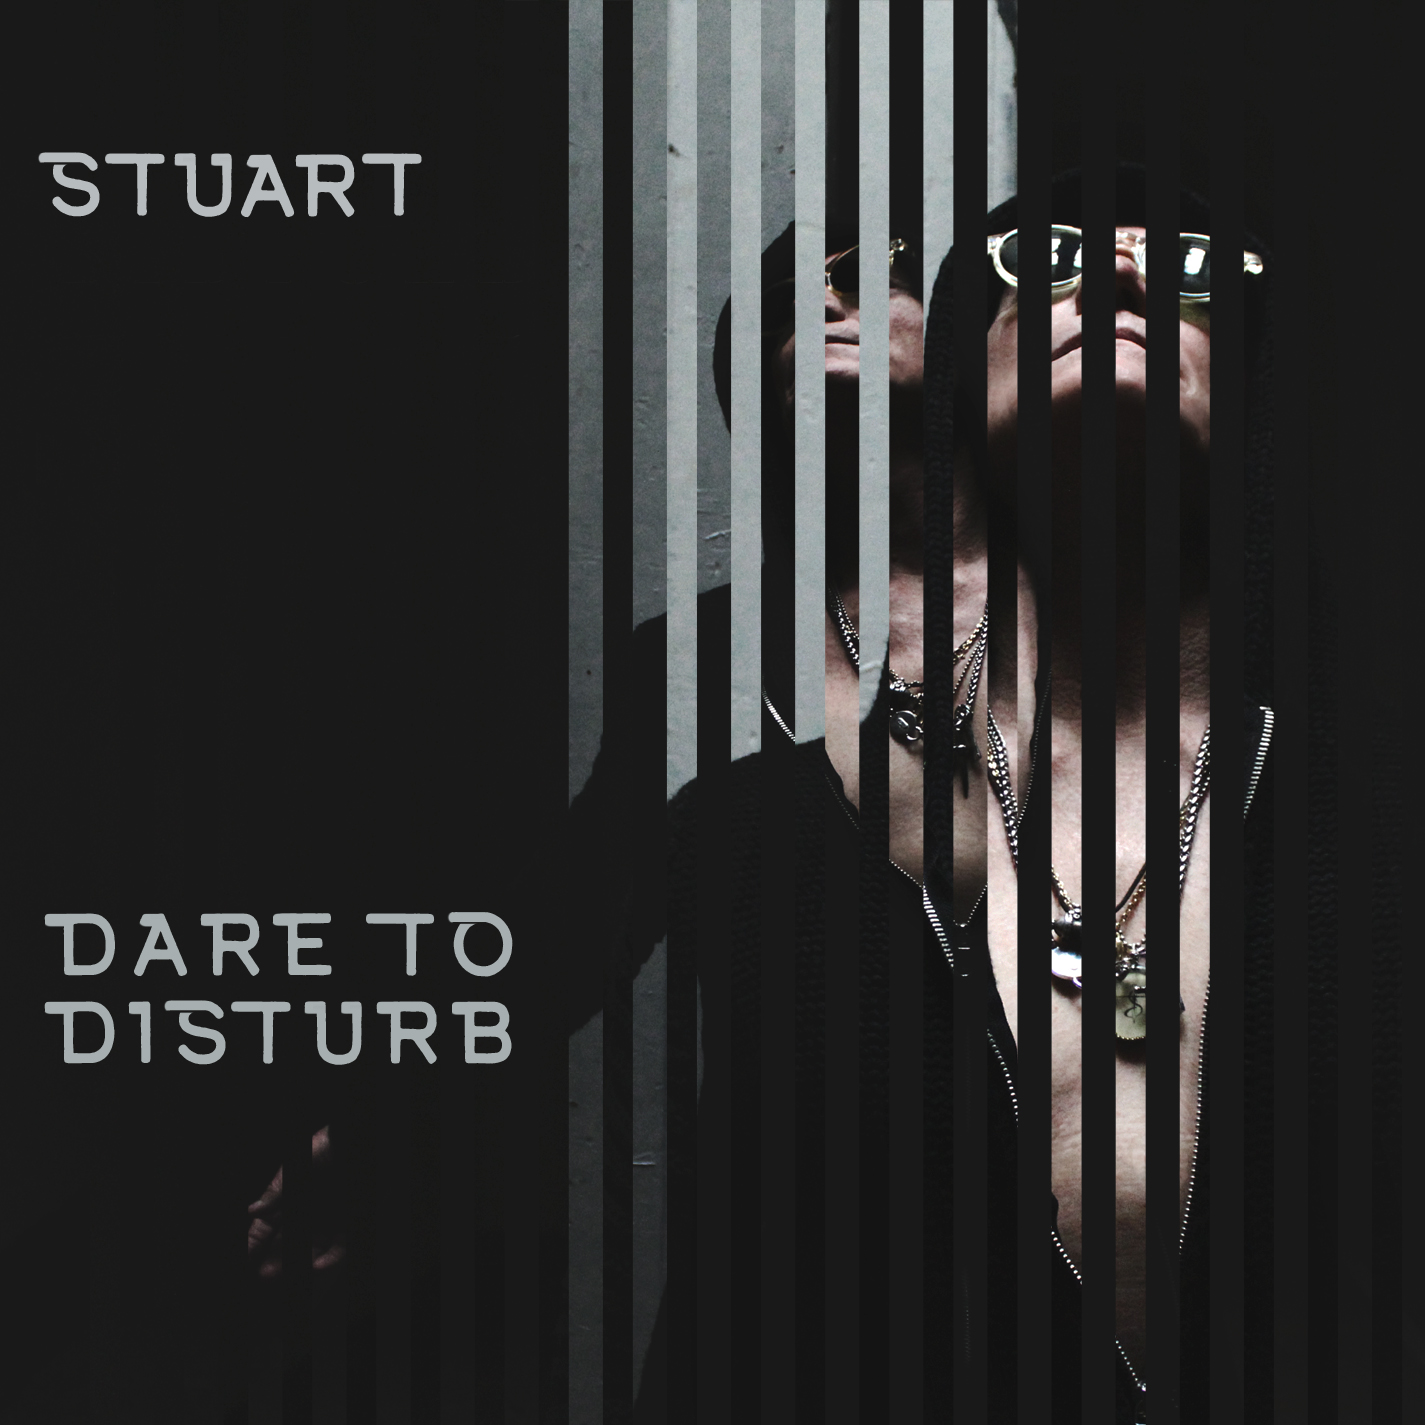 "Dare To Disturb" by Stuart